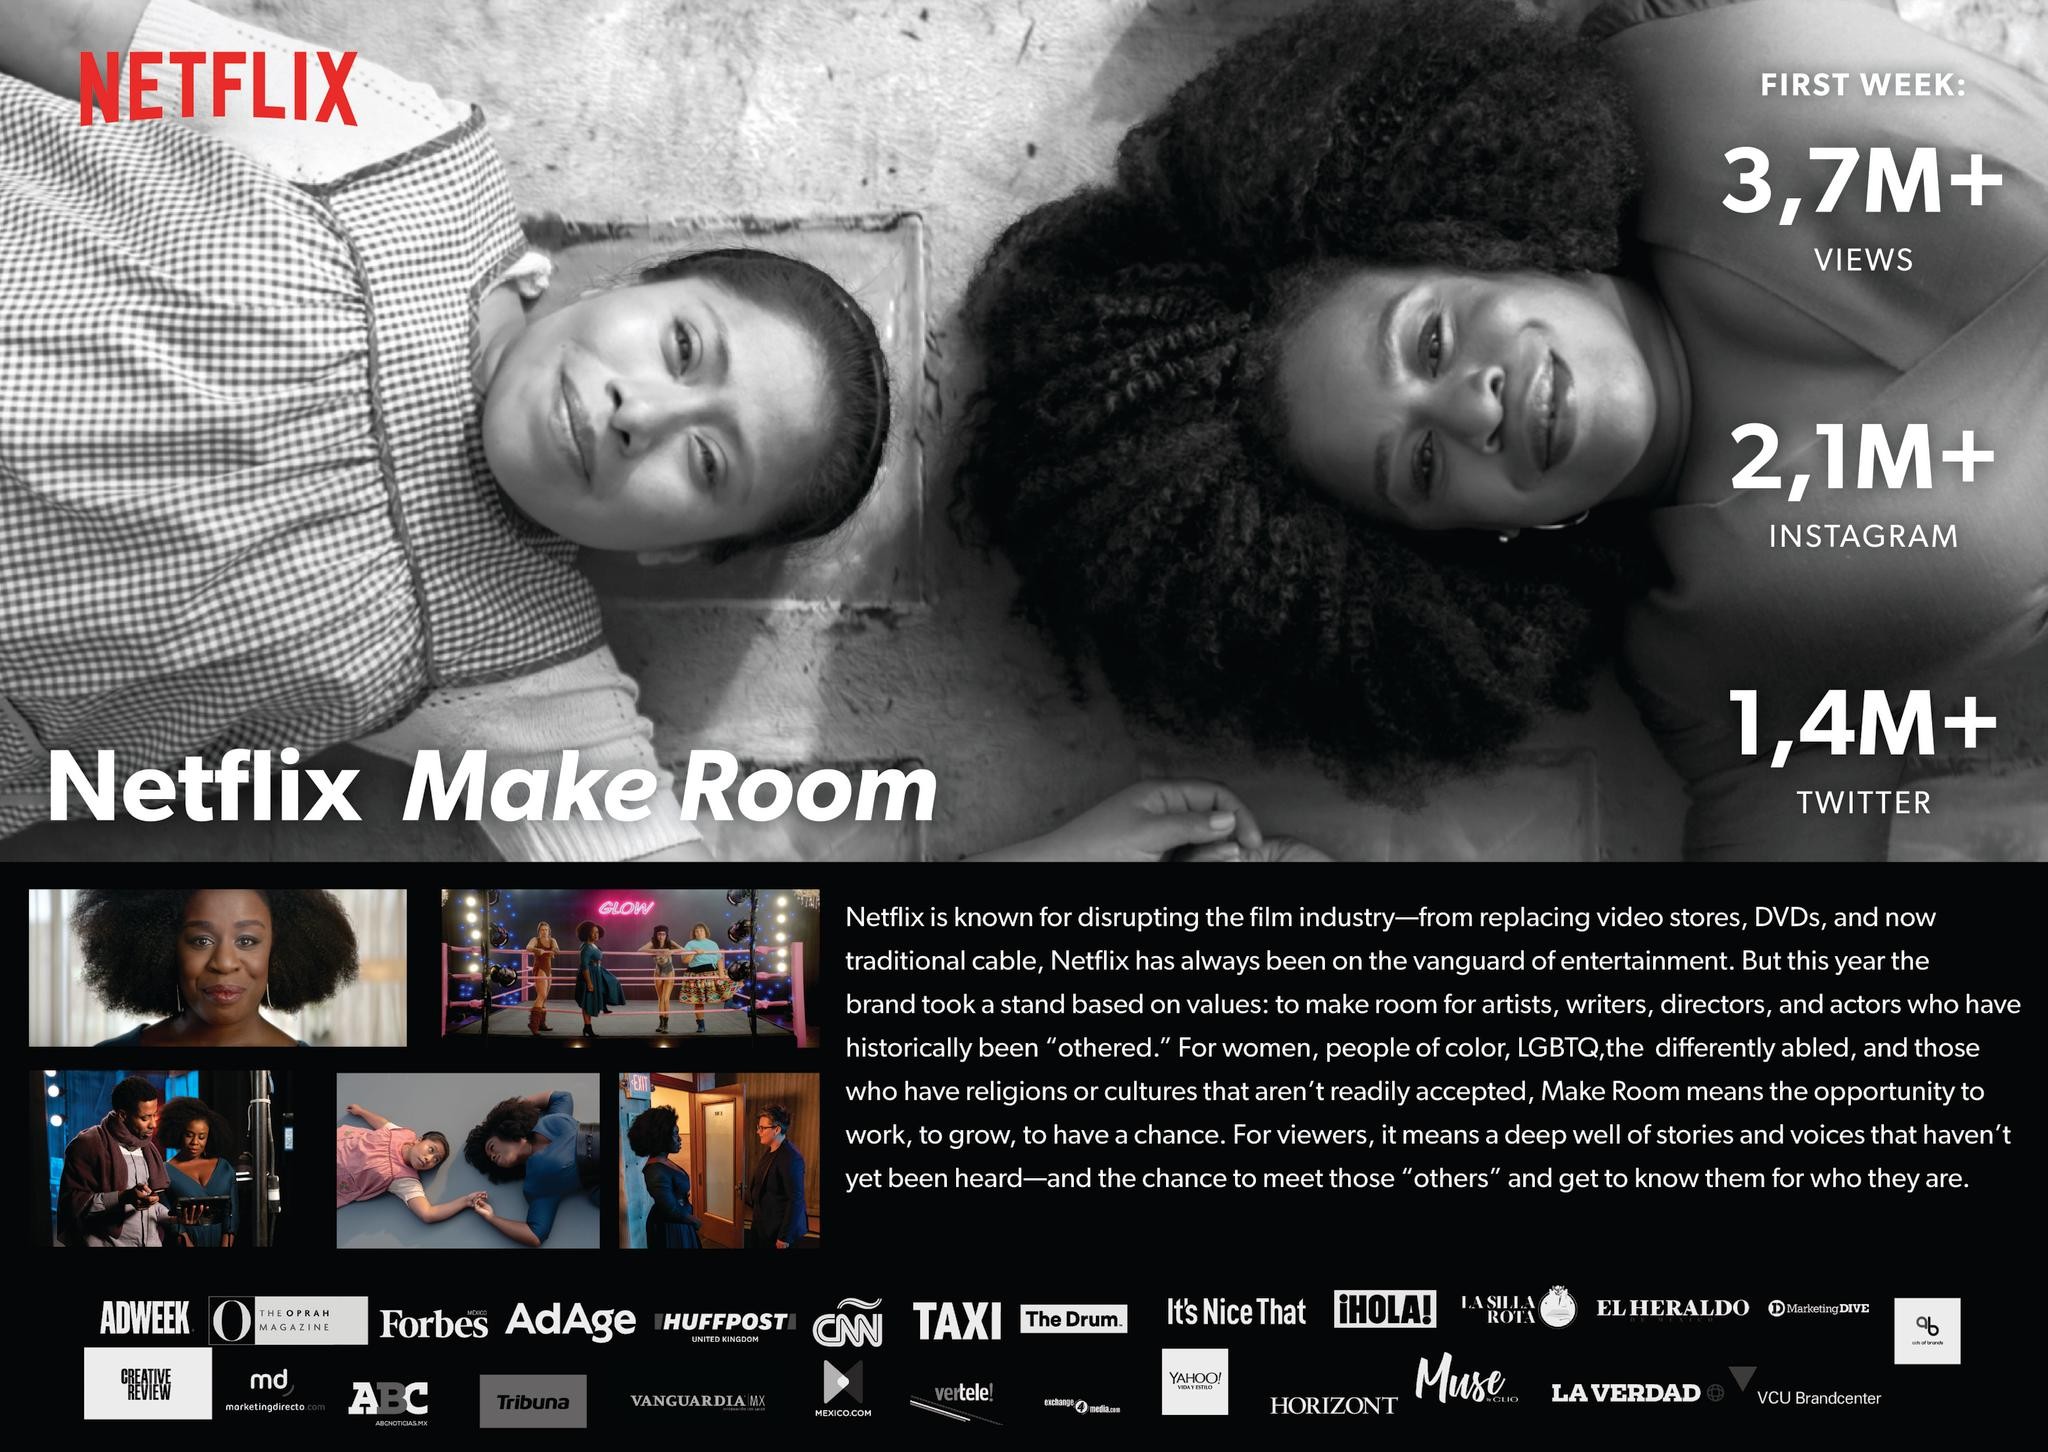 Netflix "Make Room"